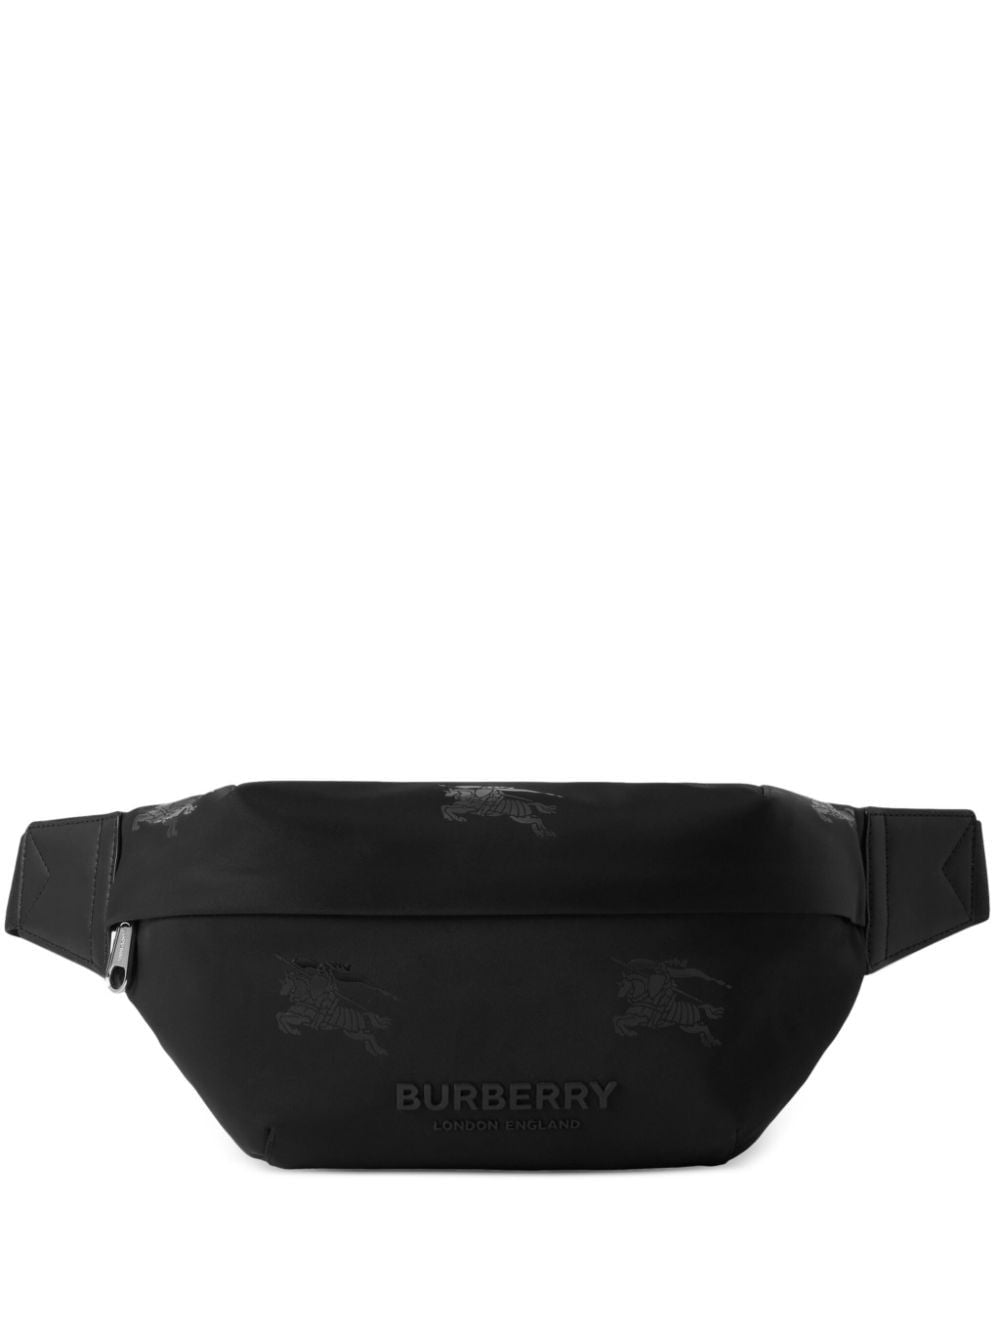 Burberry Black Quilted Fabric Medium Sonny Bum Bag Burberry